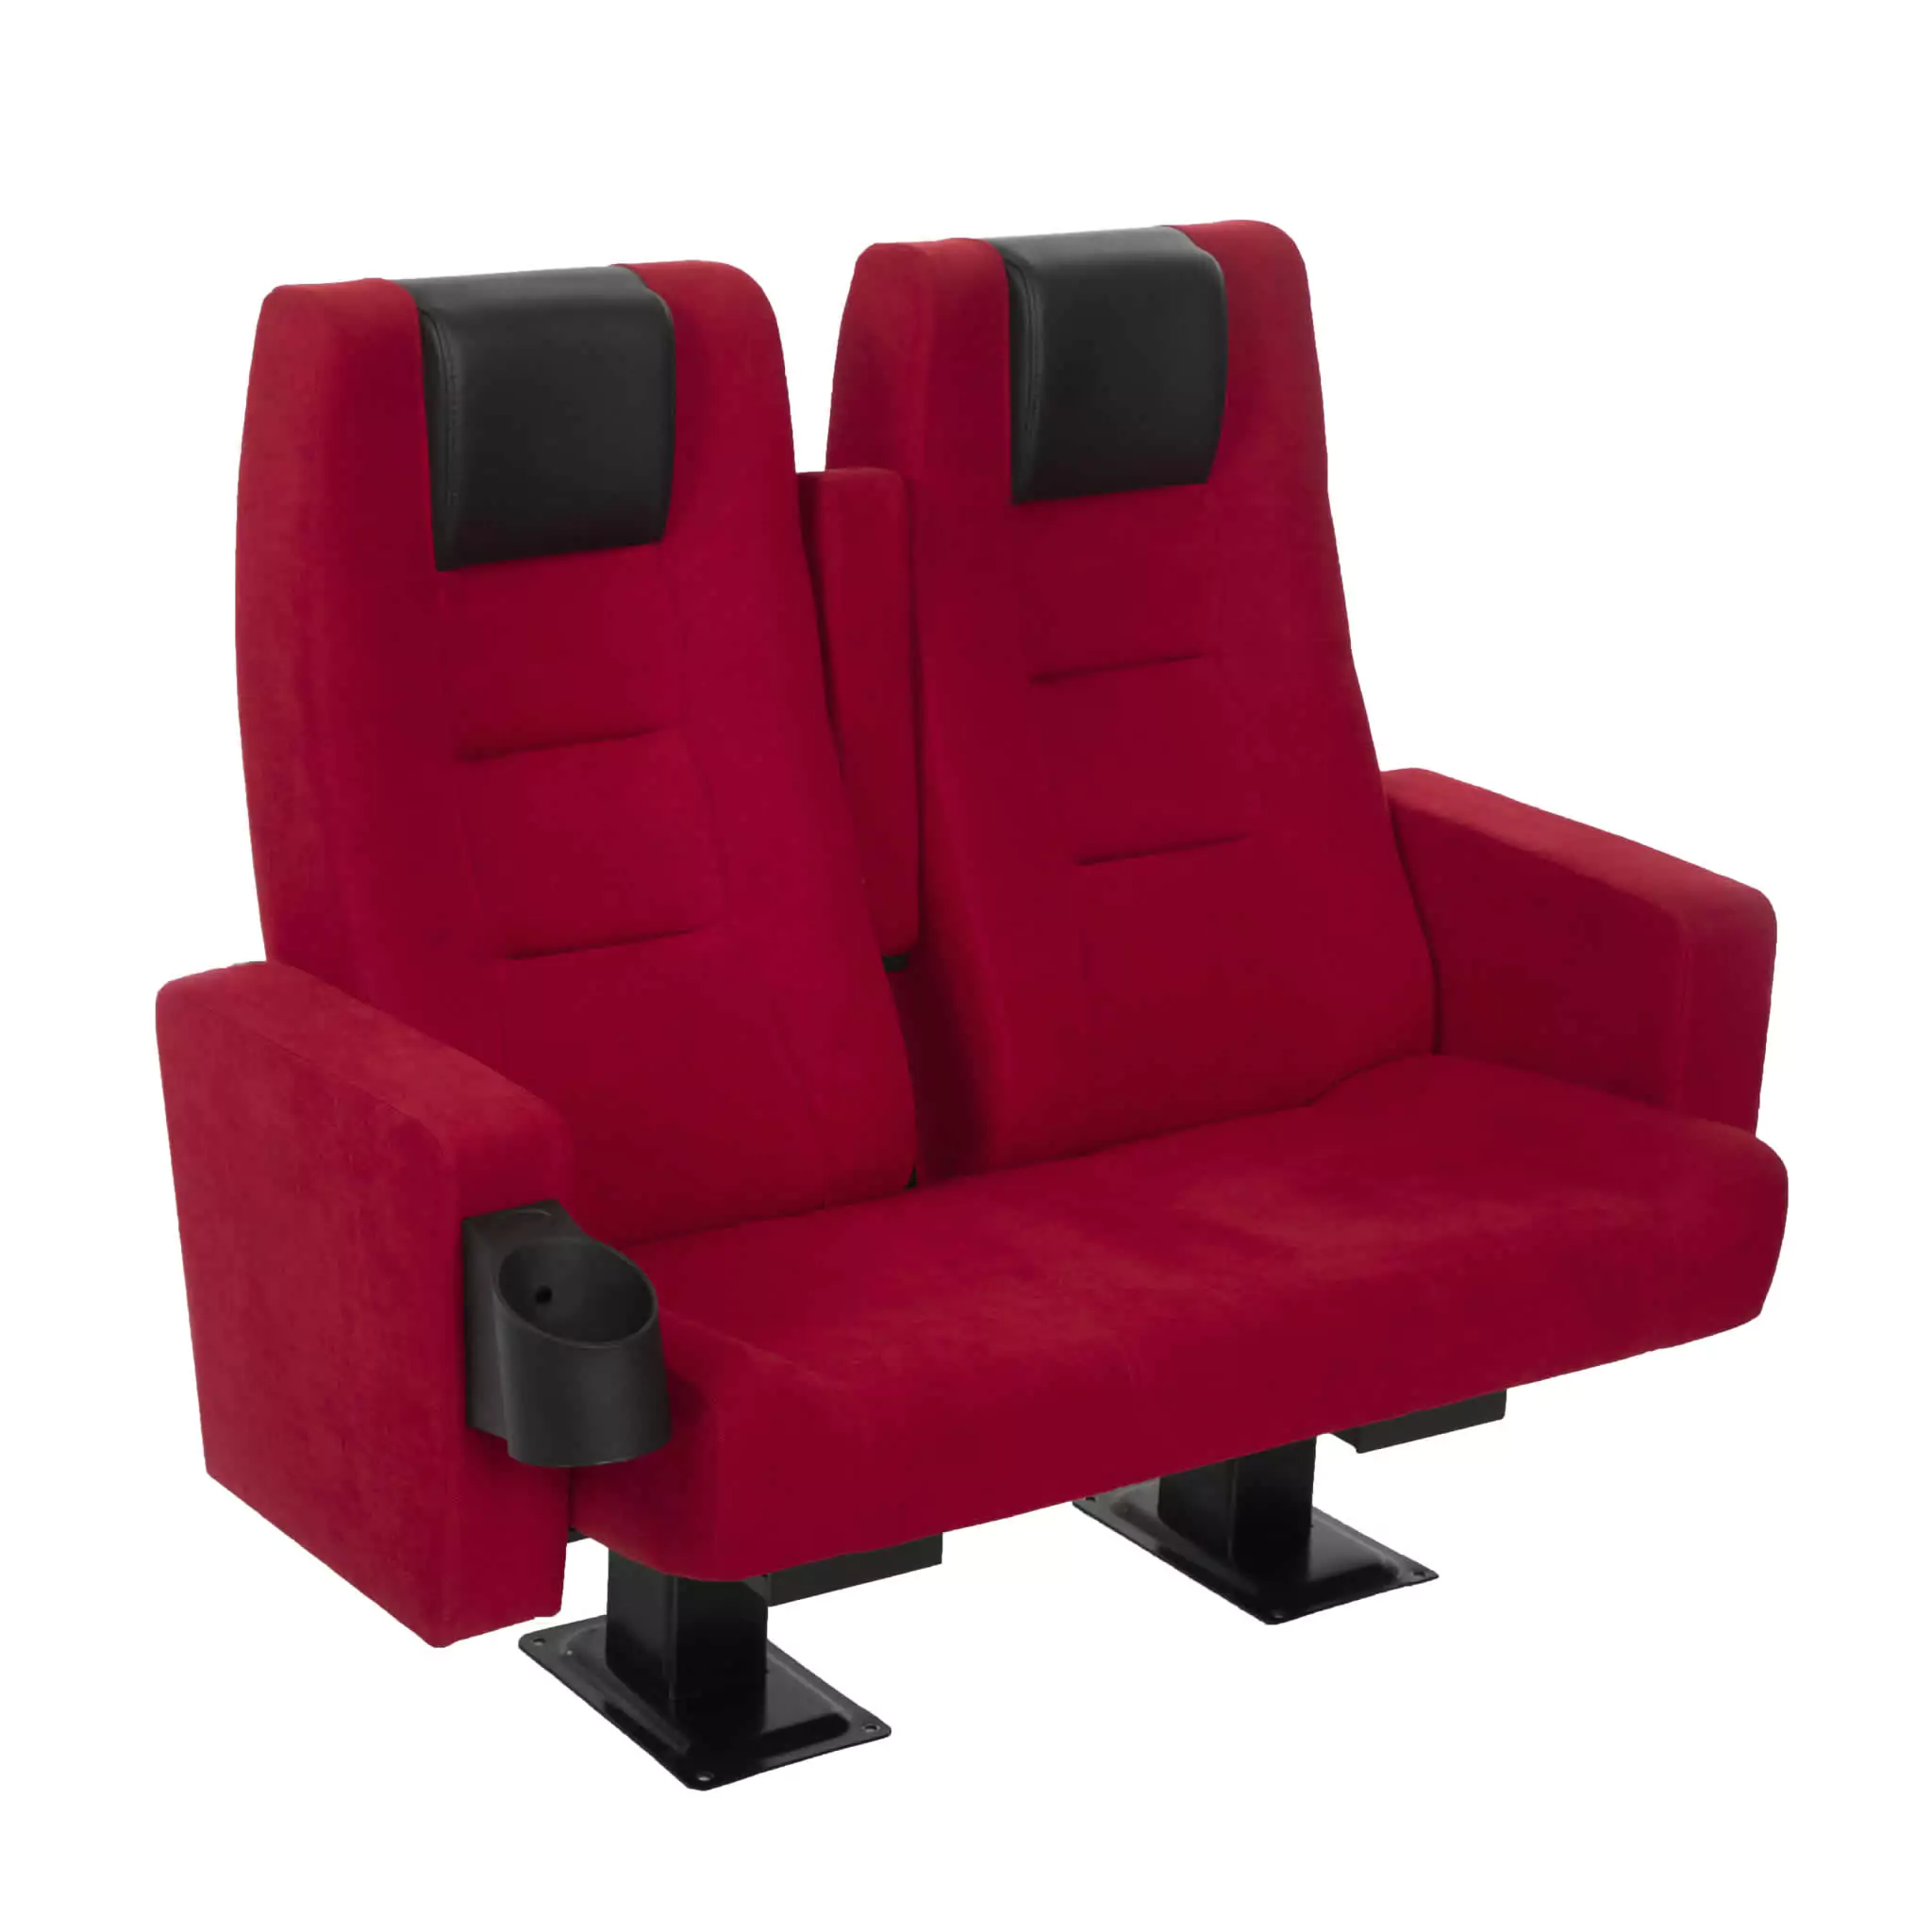 Seat Model: BOSS PREMIUM / TWIN